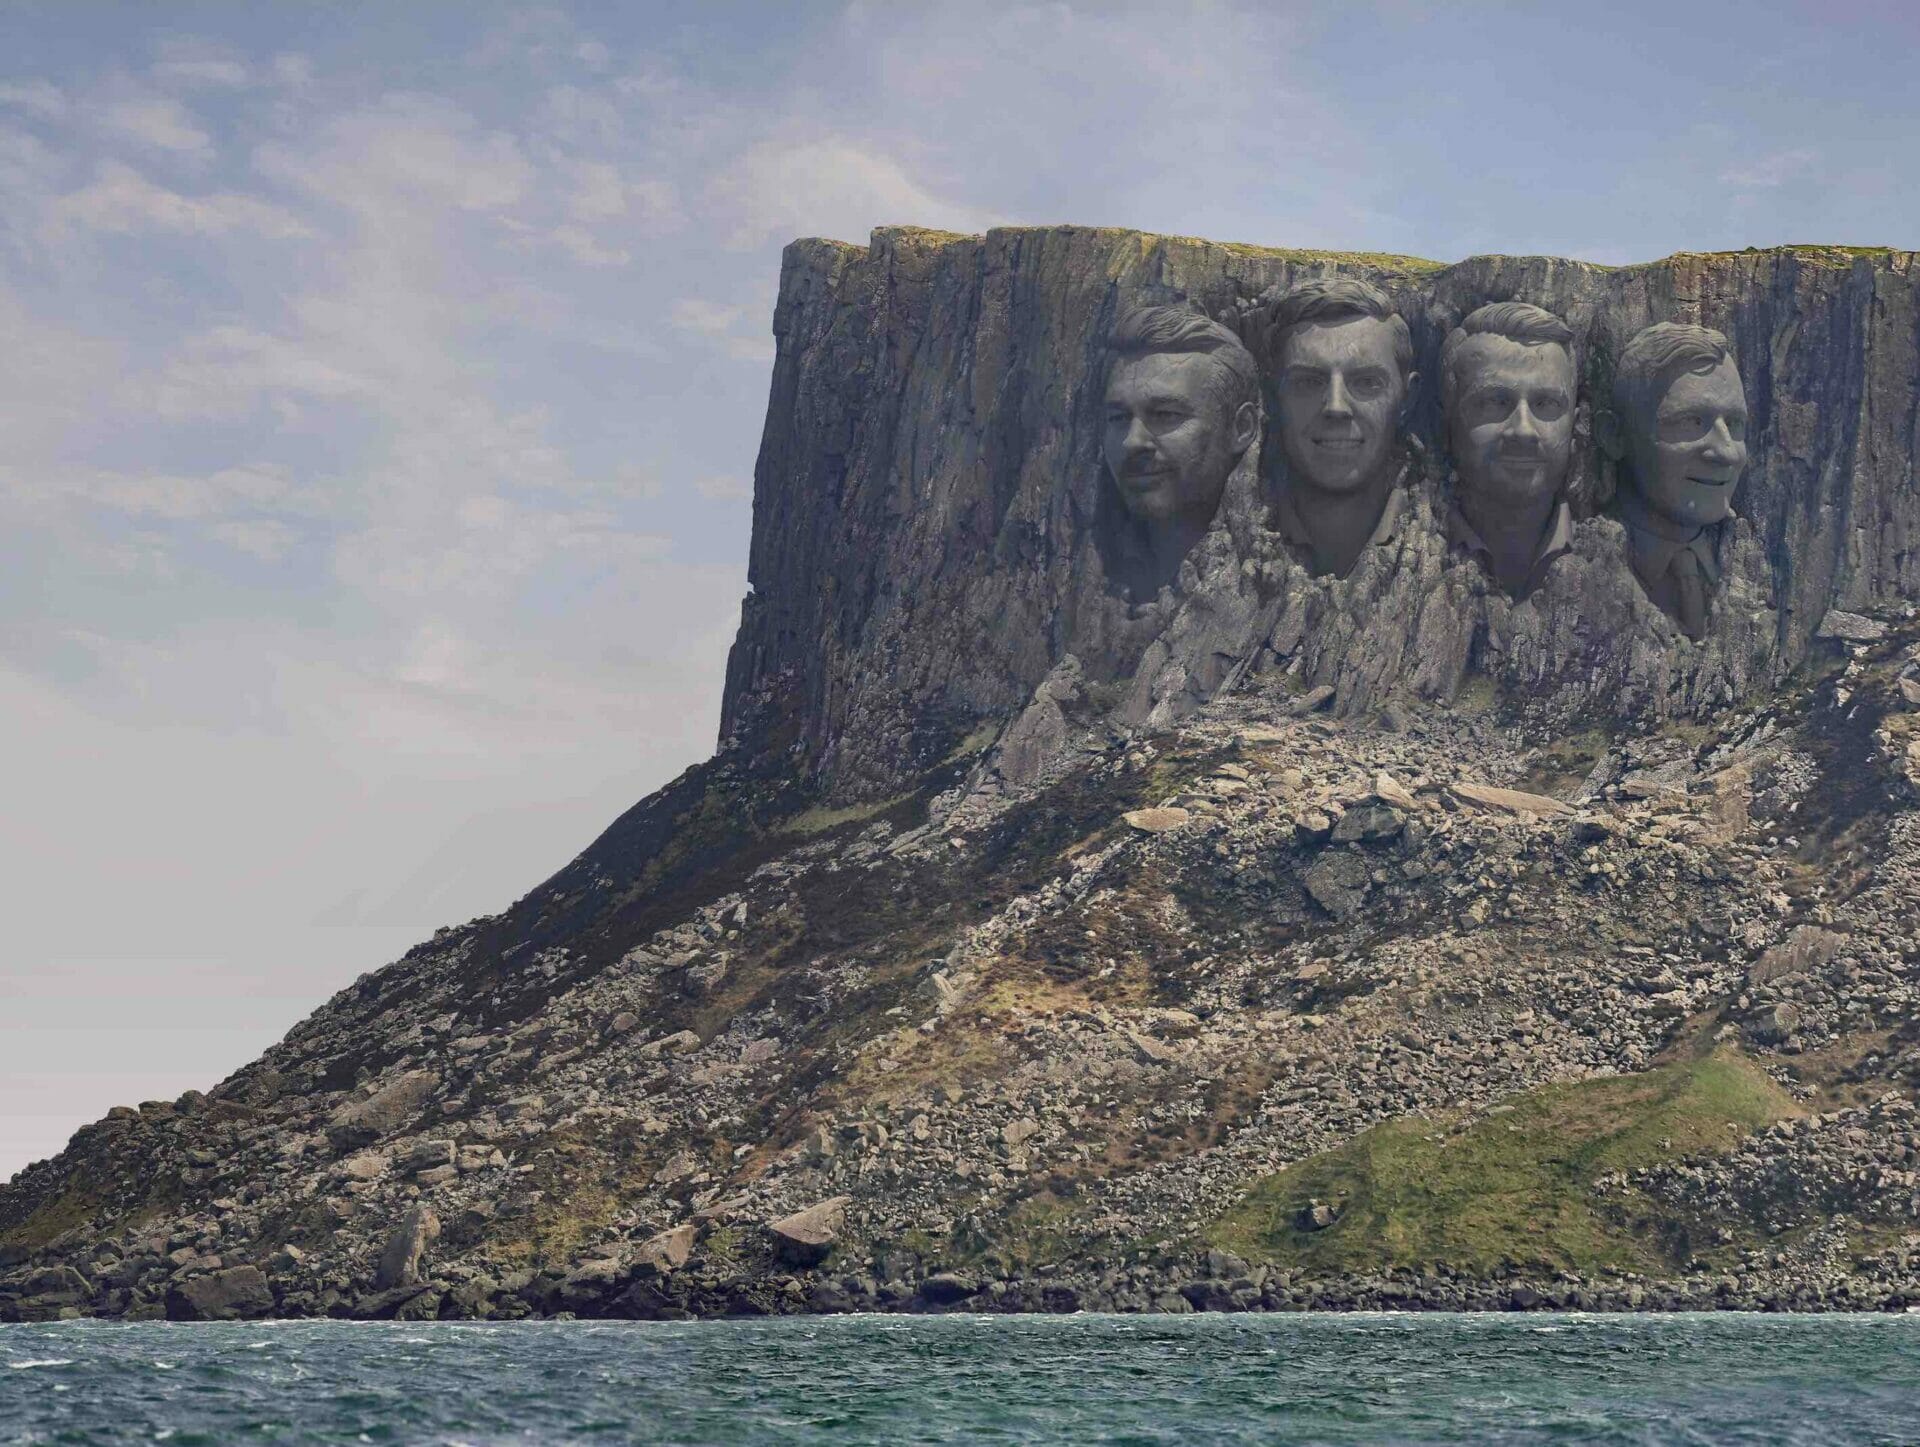 Famed Northern Ireland cliffs take on golfing Mount Rushmore look